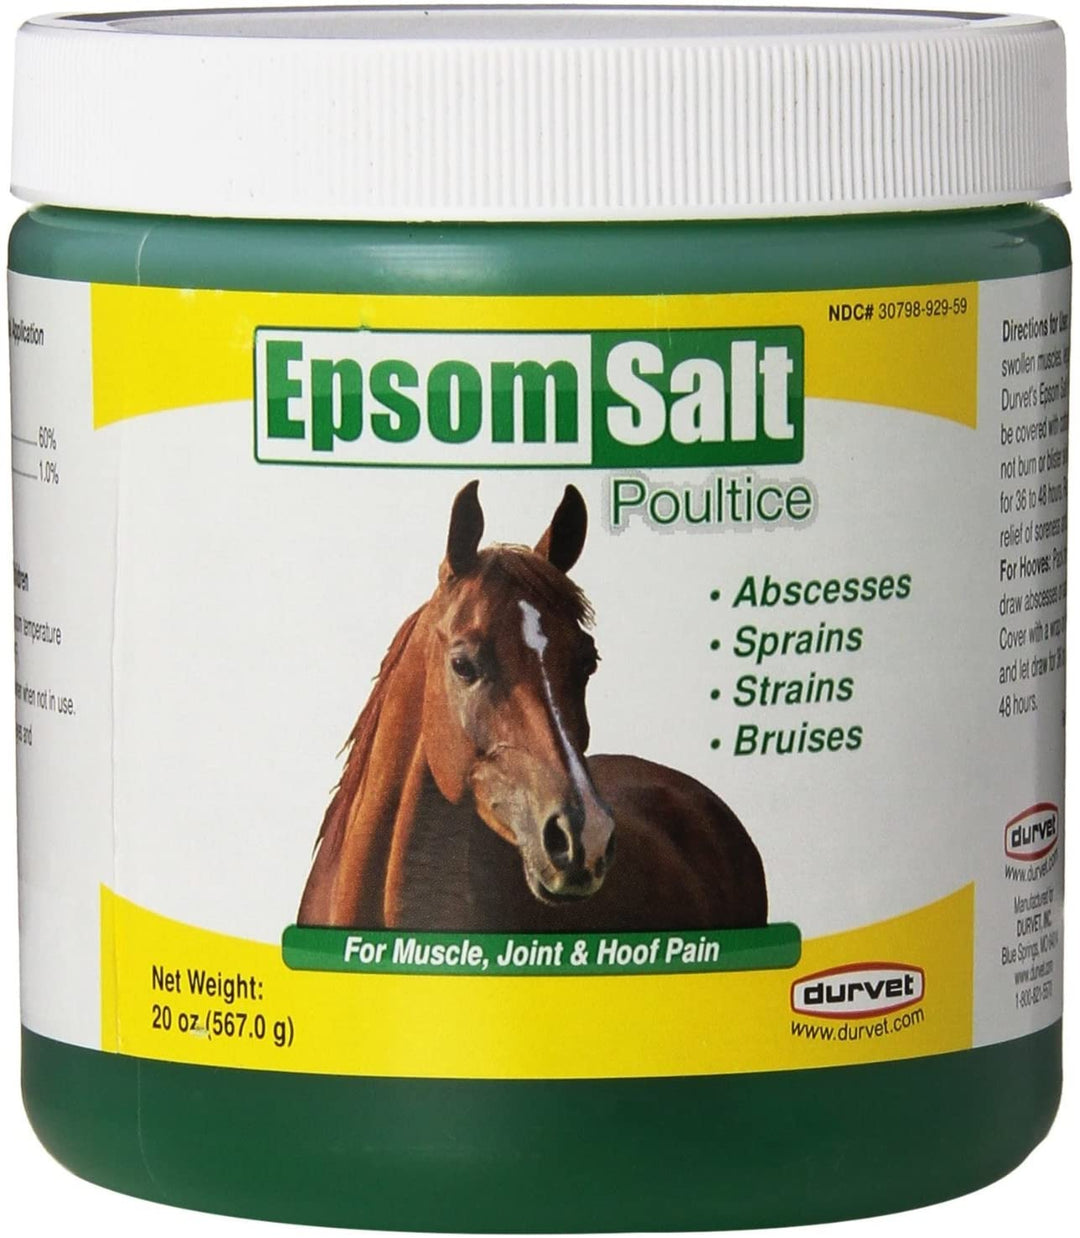 EPSON SALT . - J&R Tack & Feed CO